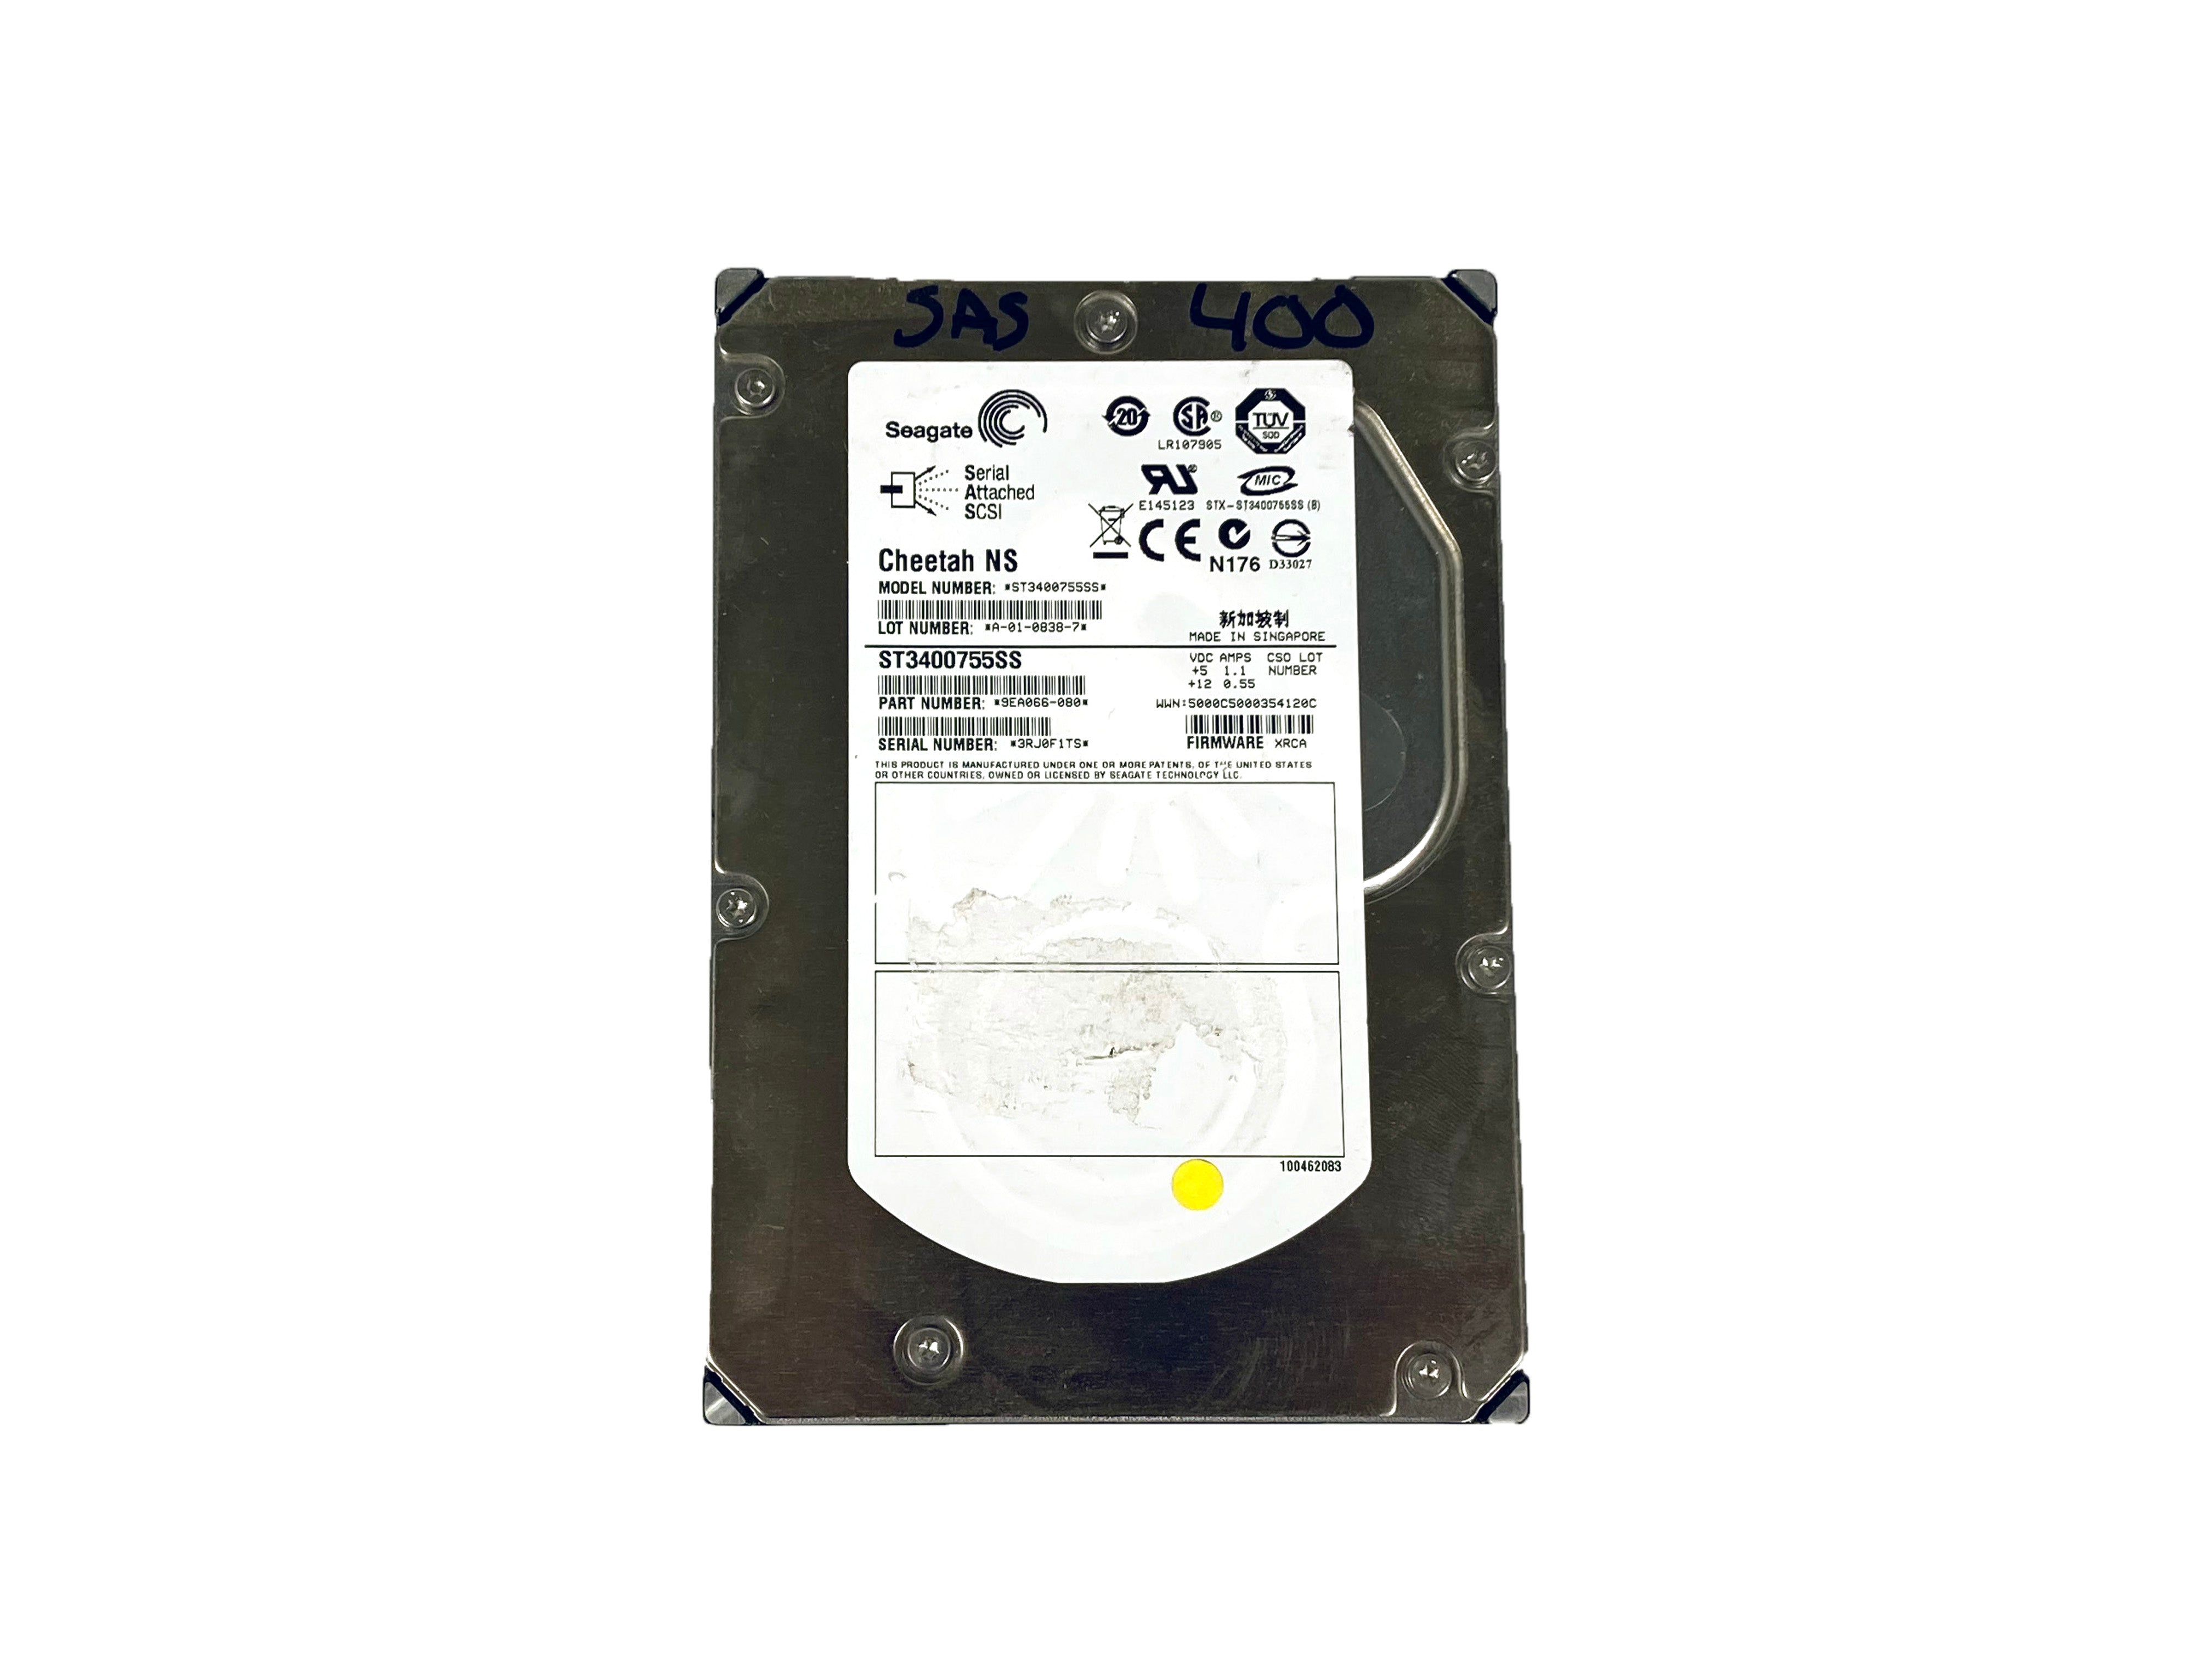 Seagate 400GB HDD 3.5" SAS Hard Drive